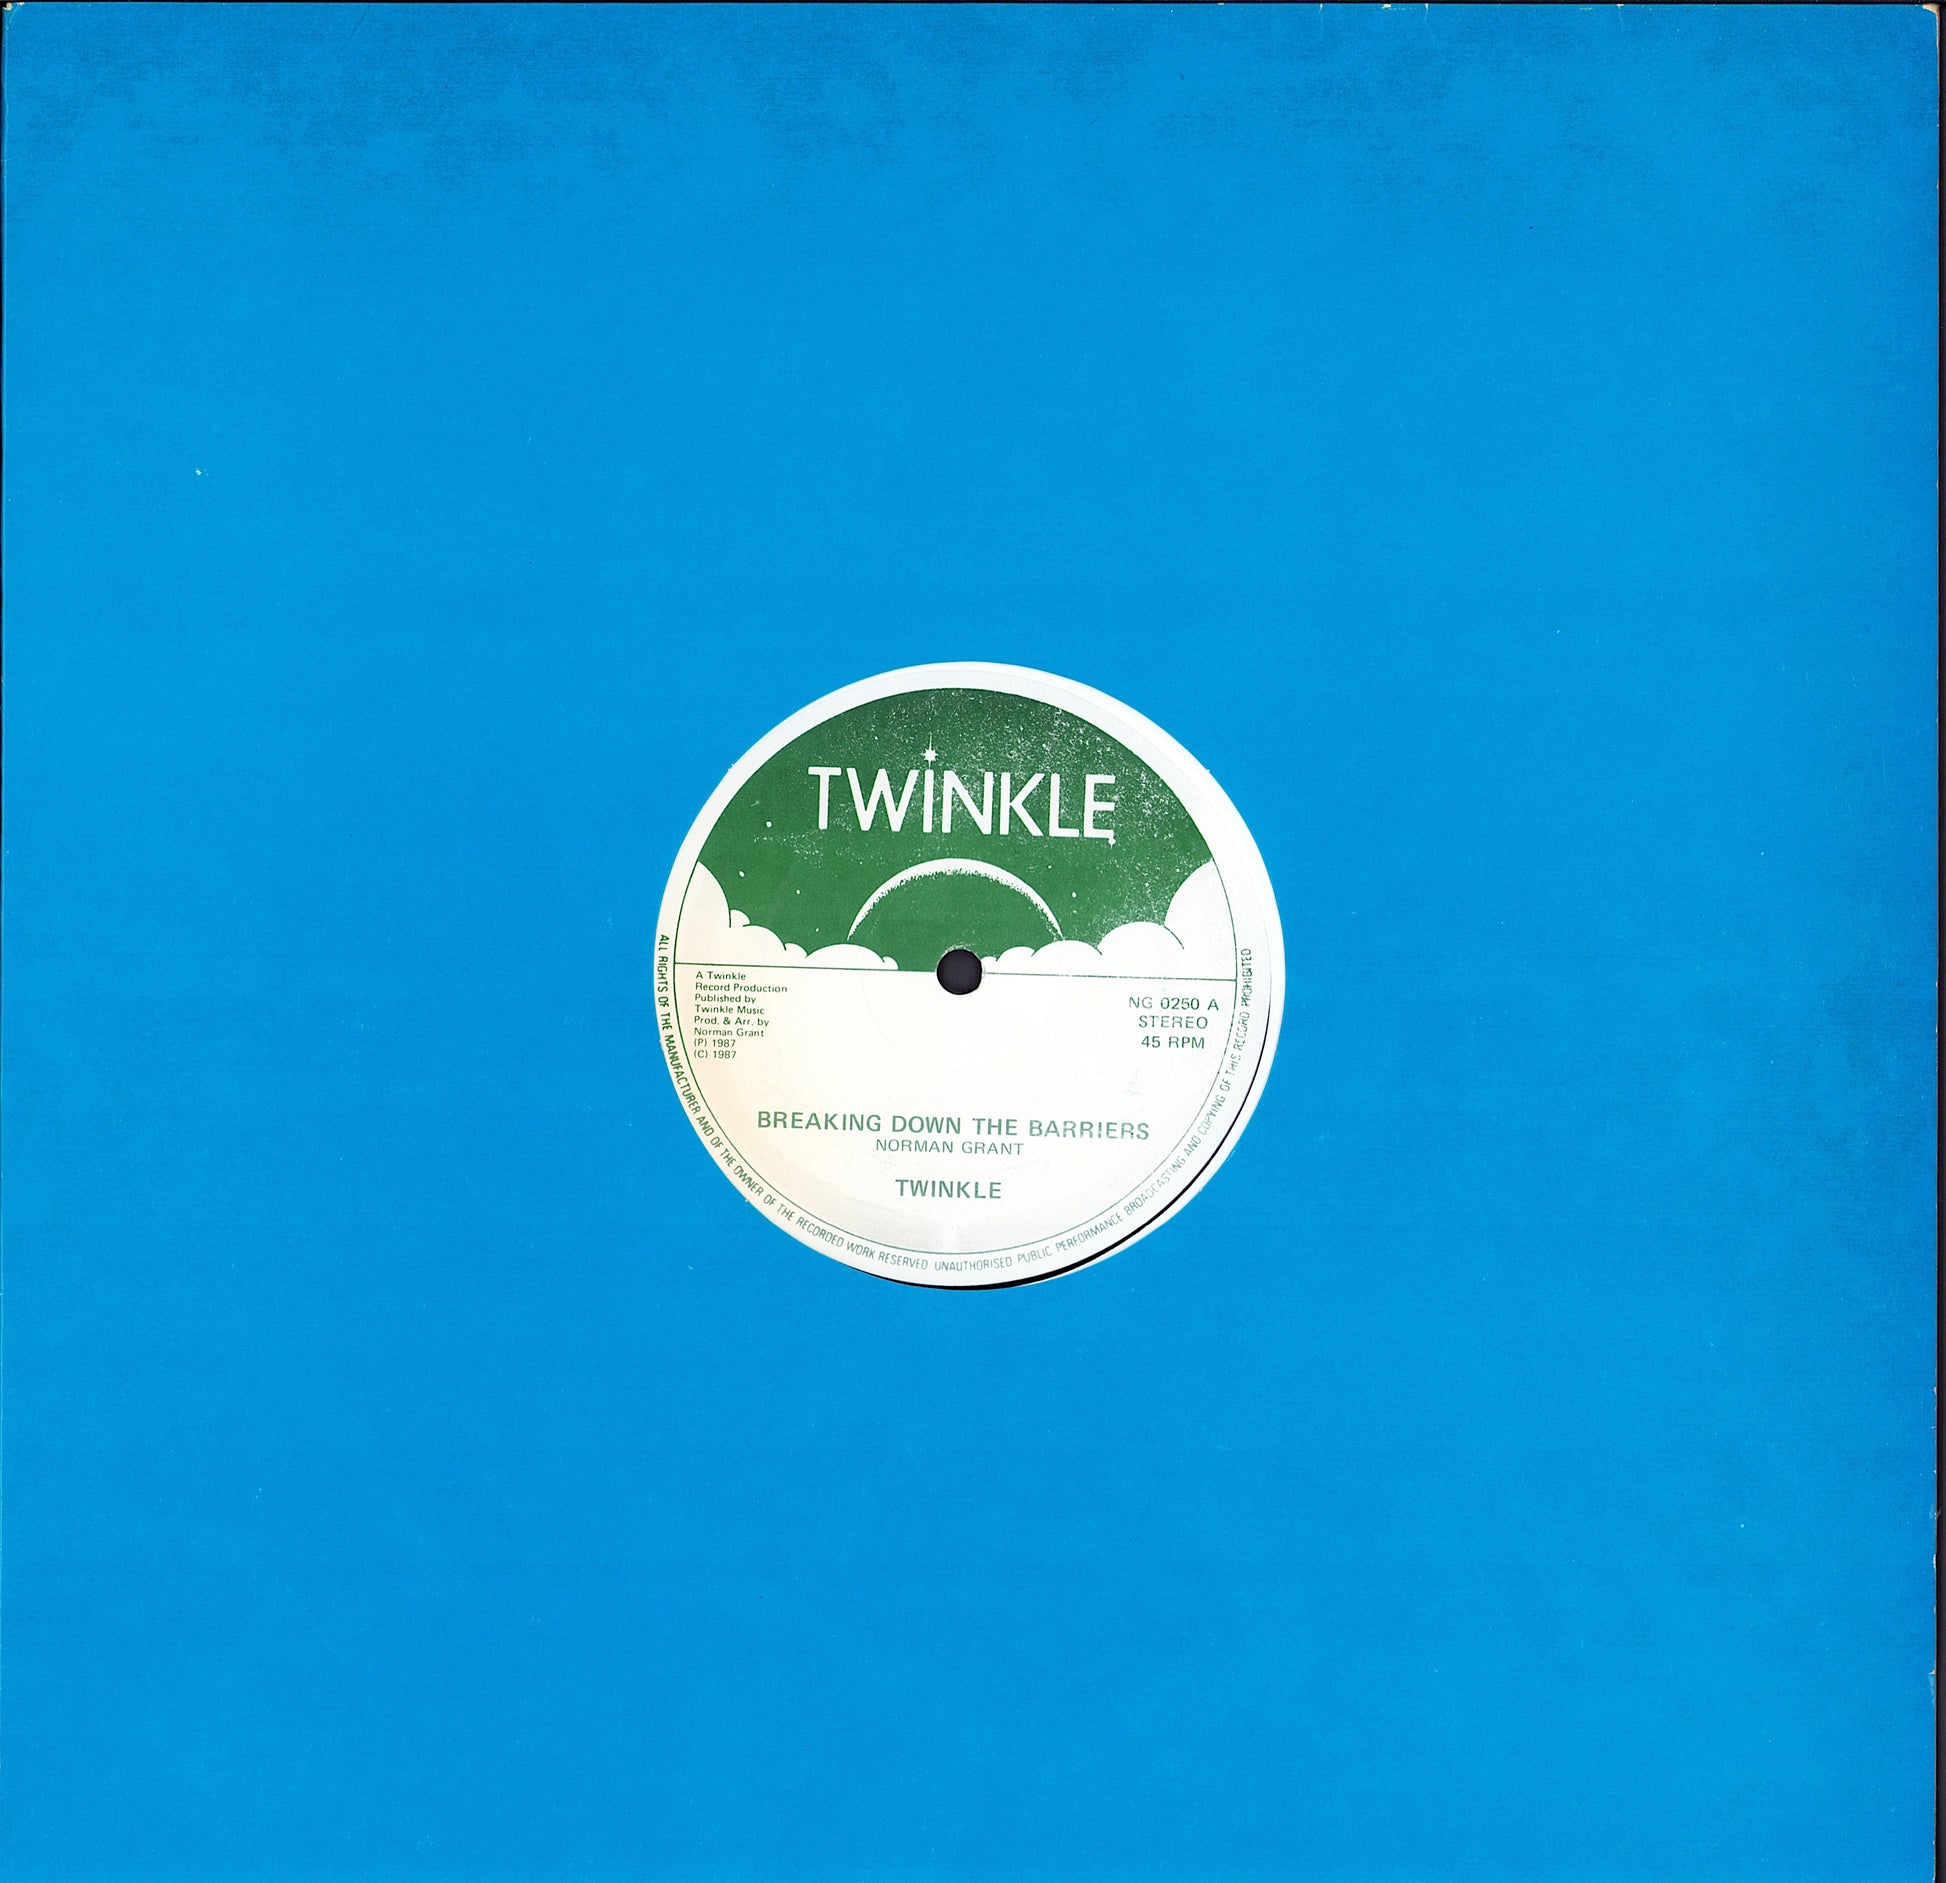 Twinkle - Breaking Down The Barriers Vinyl 12" Maxi-Single